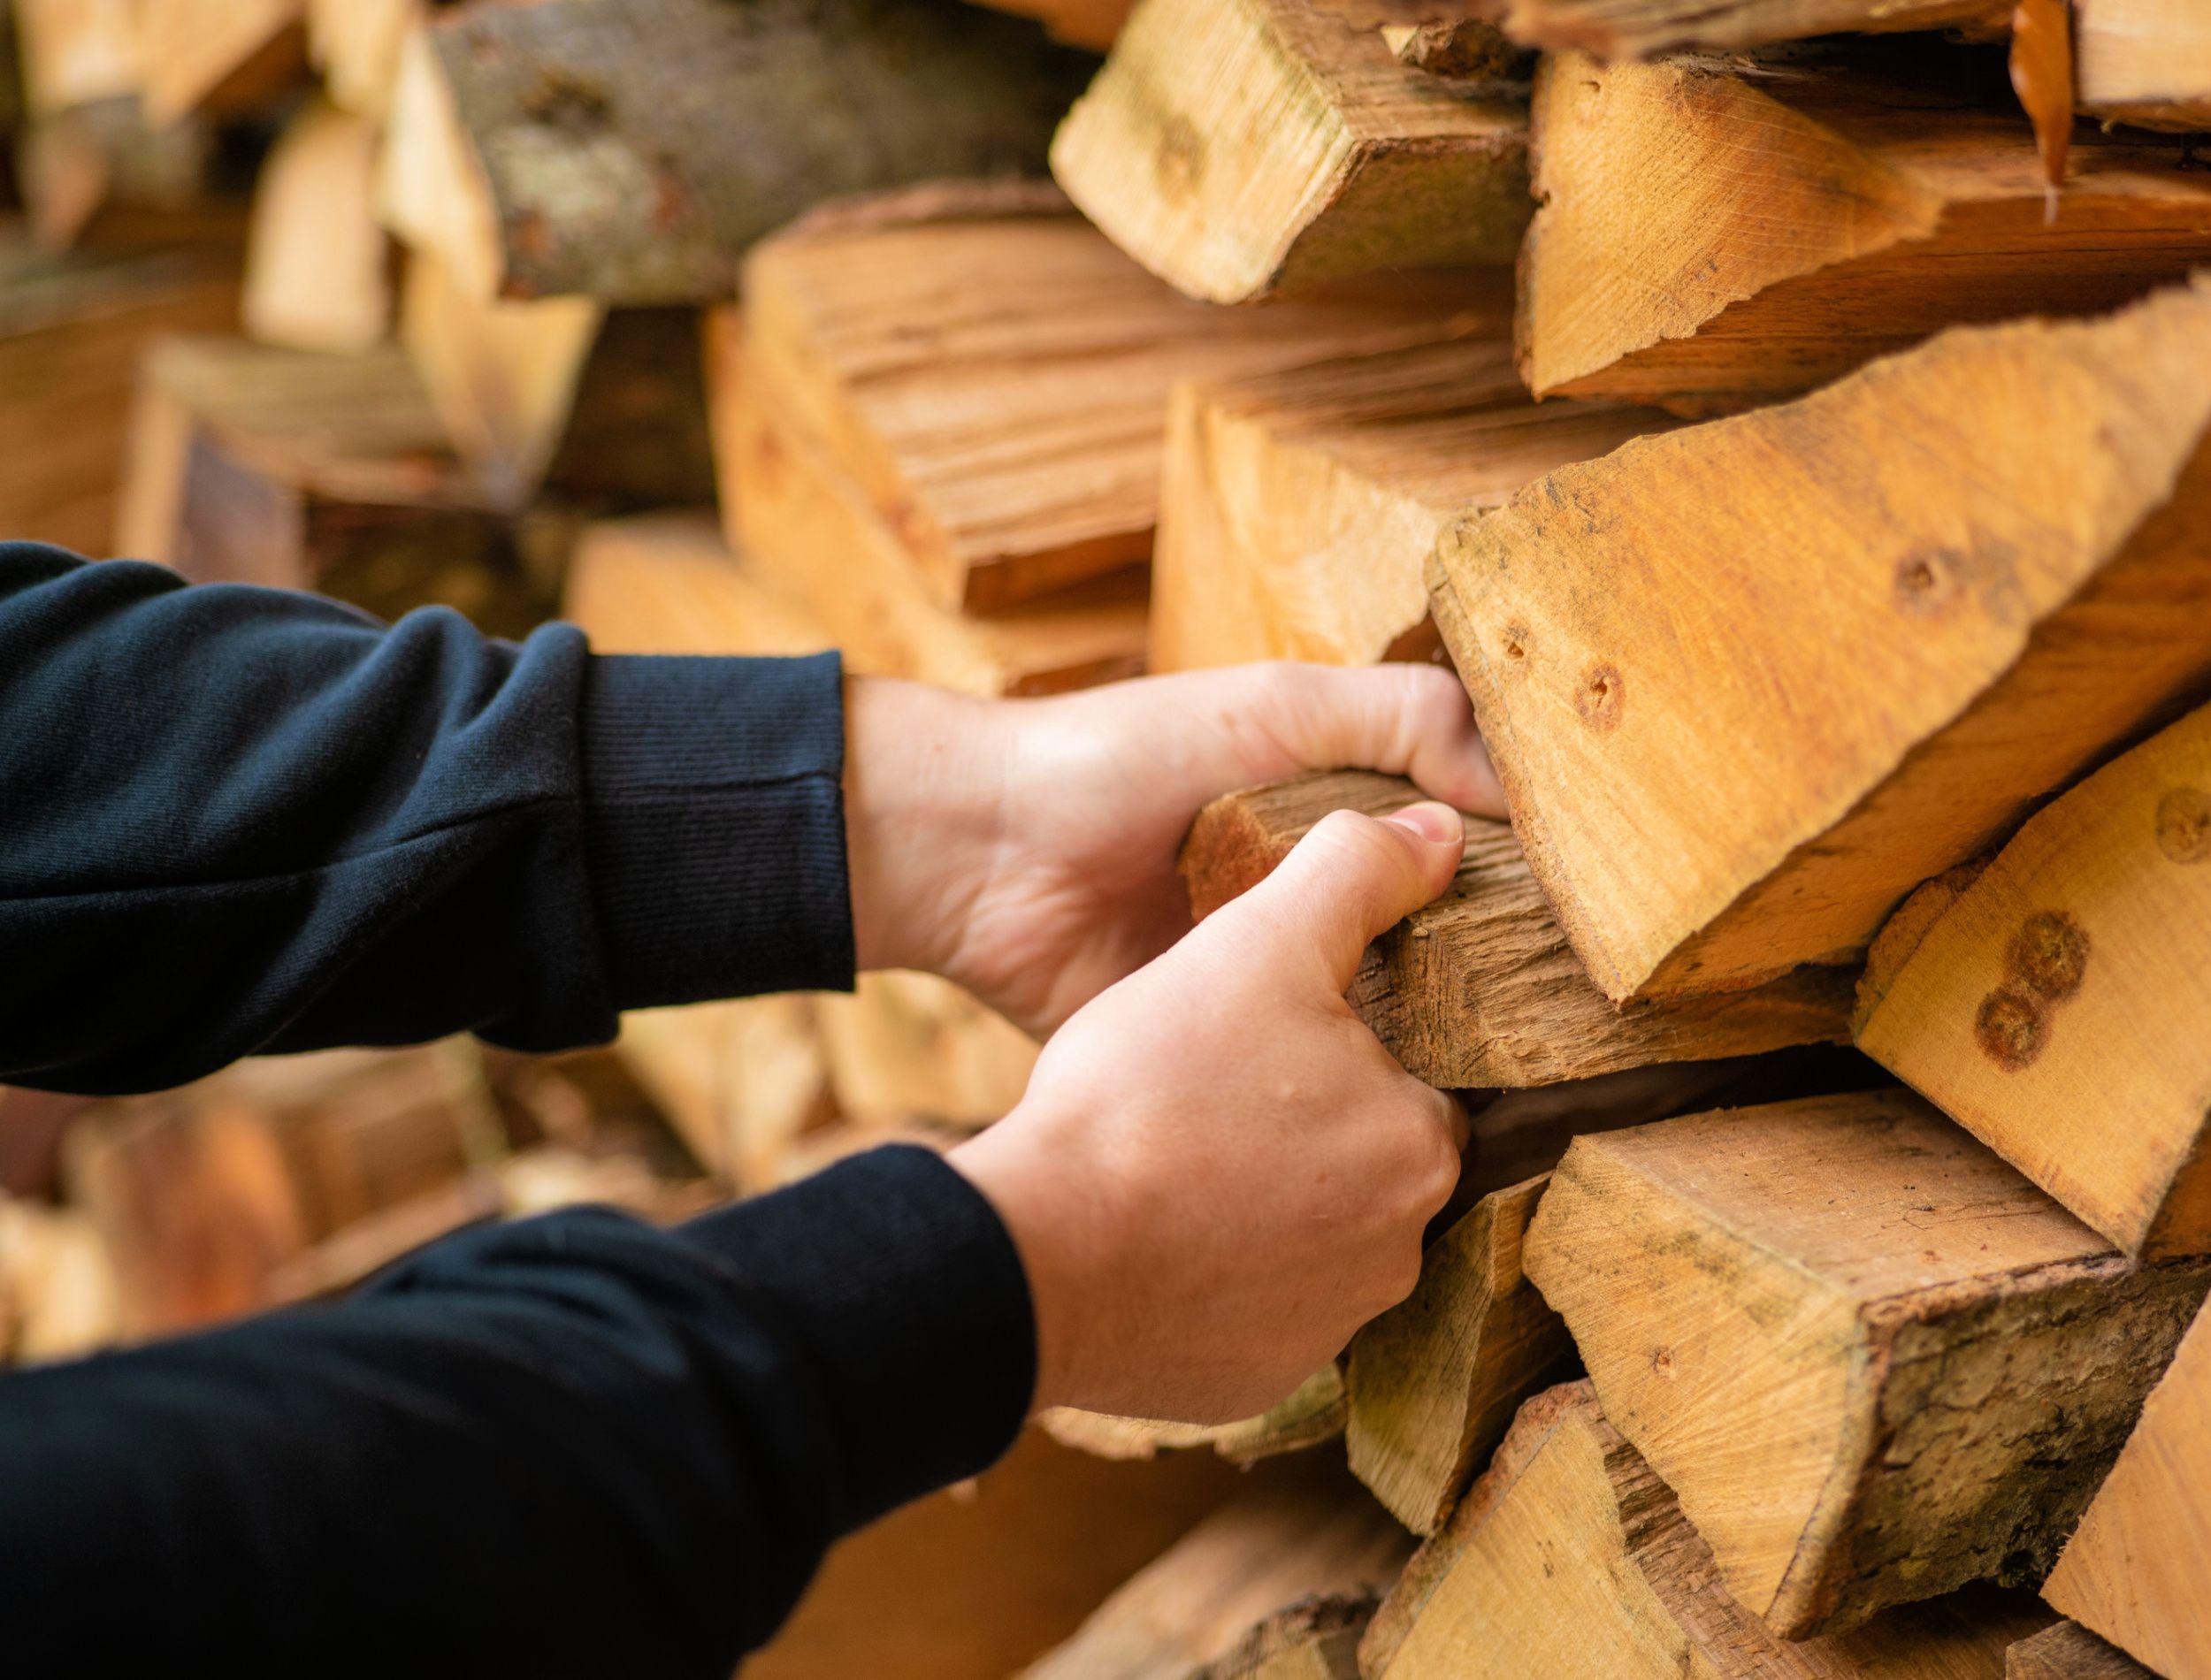 Heating season. Firewood.hands pulling a log from a woodshed. Male hands pulling a log from a woodshed.Heating season in Europe.Firewood and mens hands close-up.